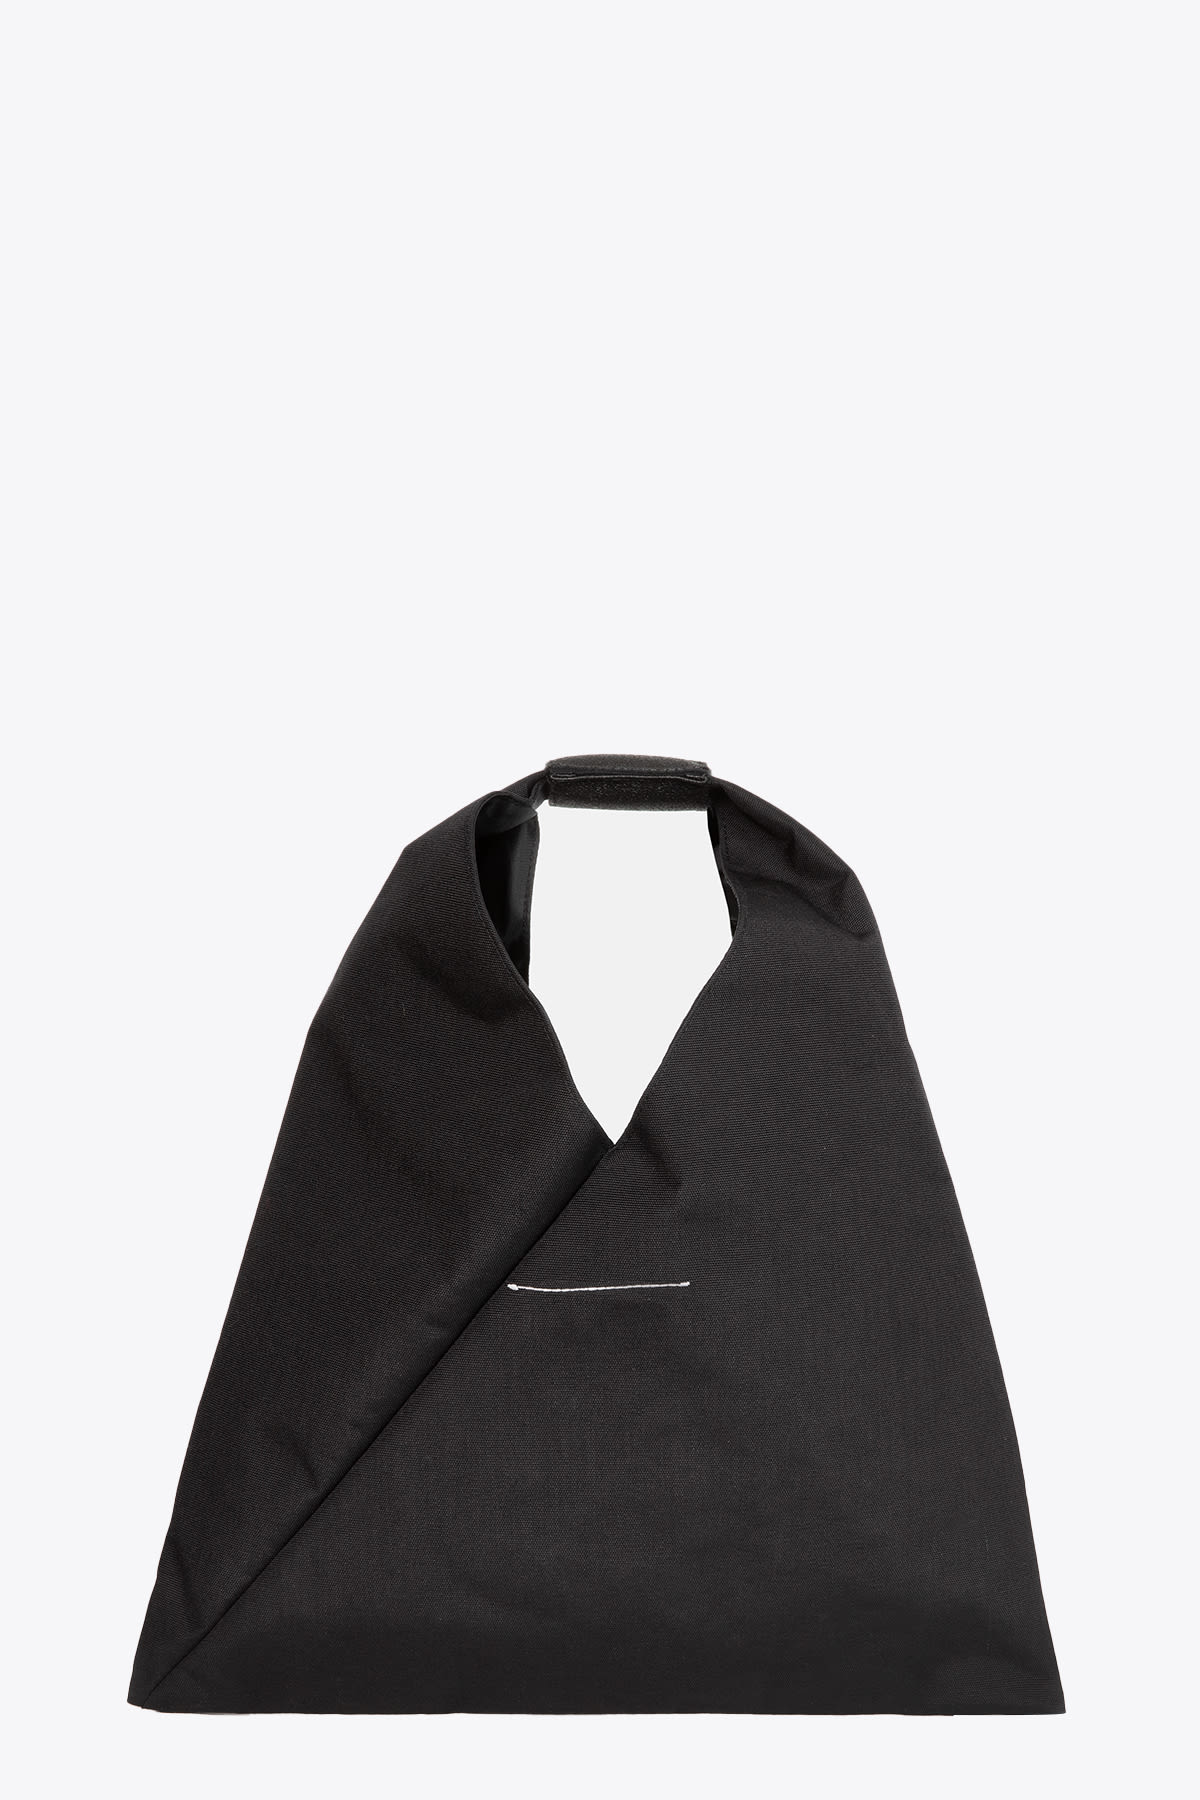 MM6 Maison Margiela Canvas Japanese Bag Black nylon Japanese bag Eastpak collaboration